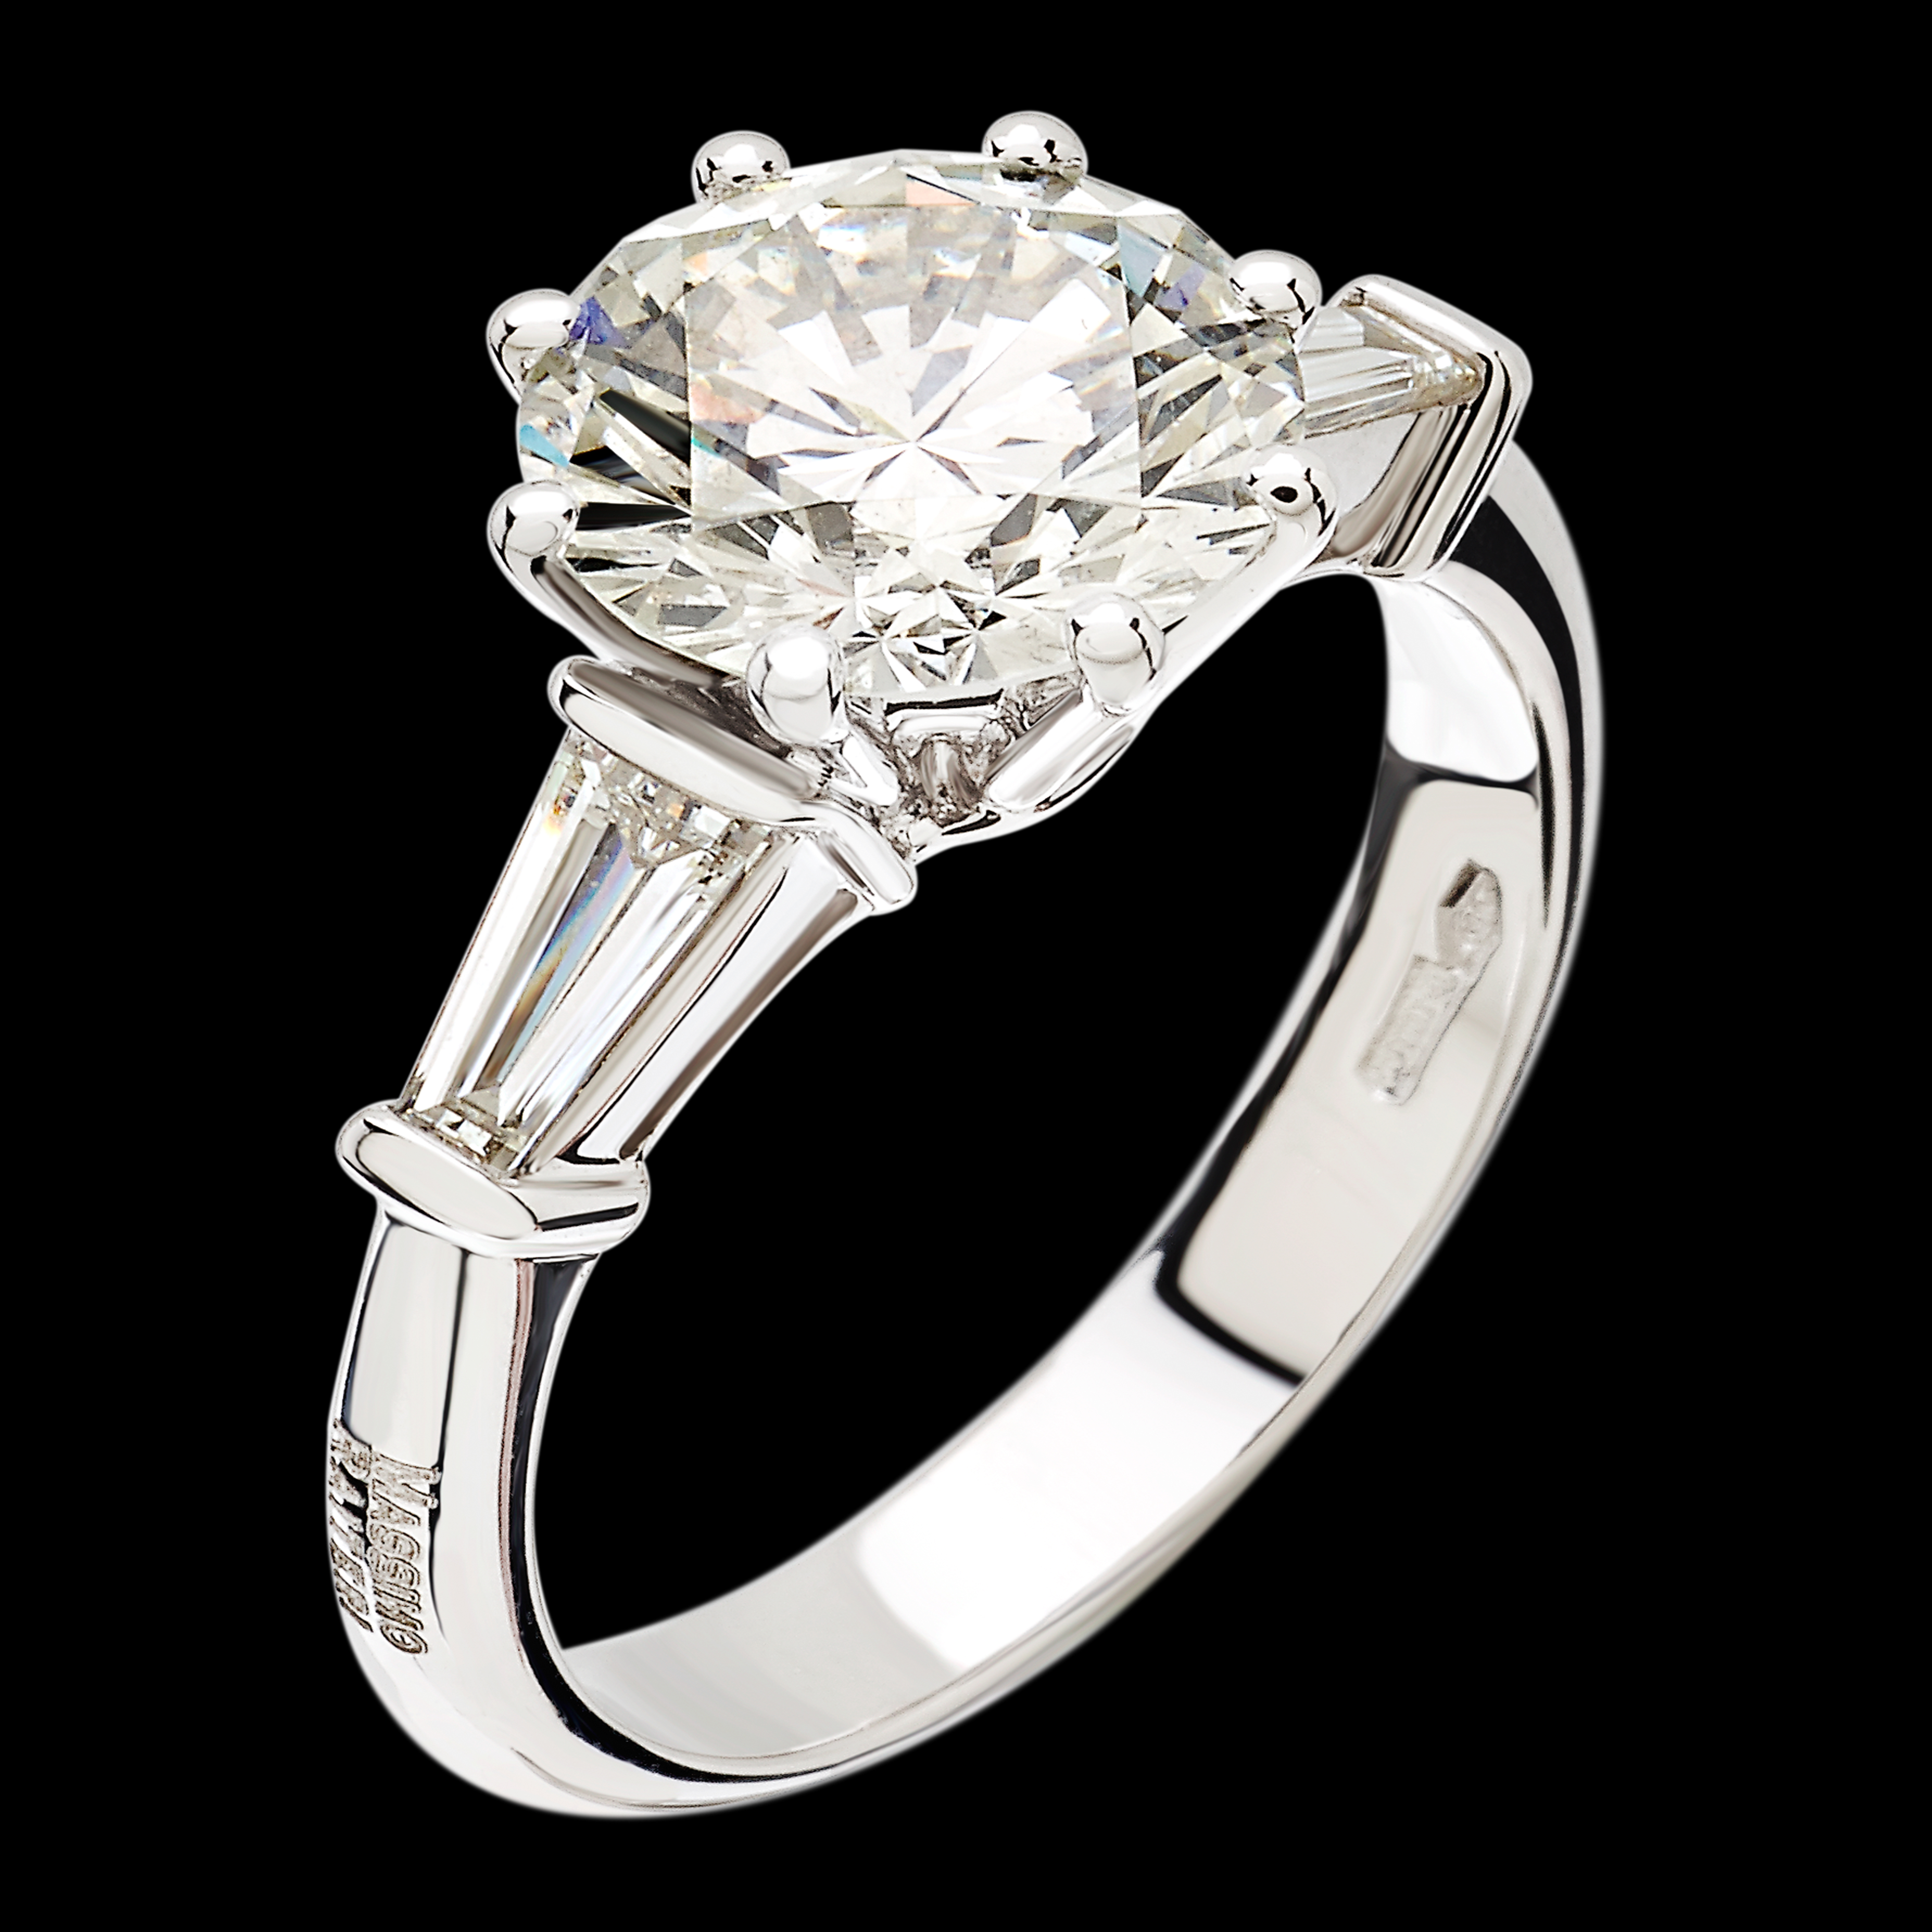 AN3481BR Massimo Raiteri Exclusive jewellery  solitair  solitario engagement wedding fidanzamento